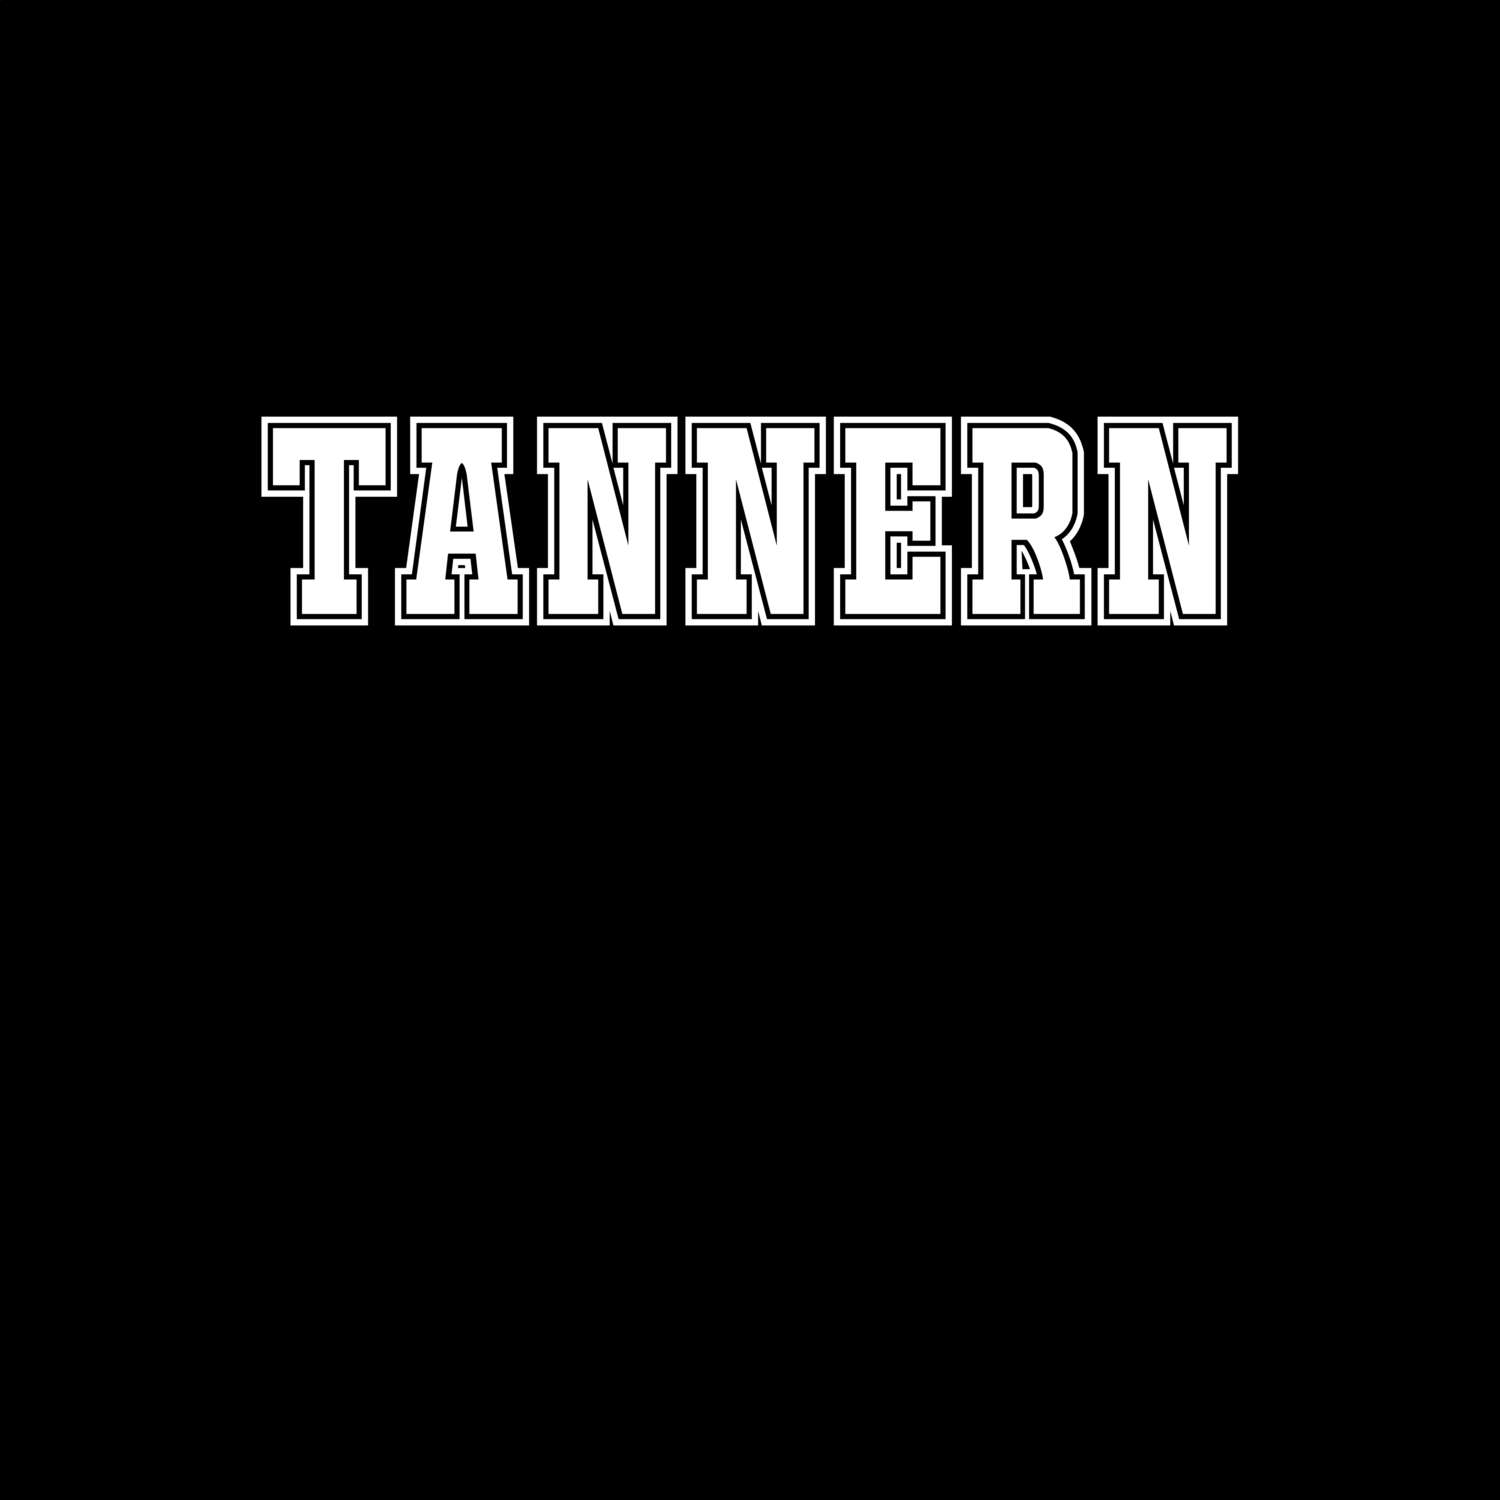 Tannern T-Shirt »Classic«